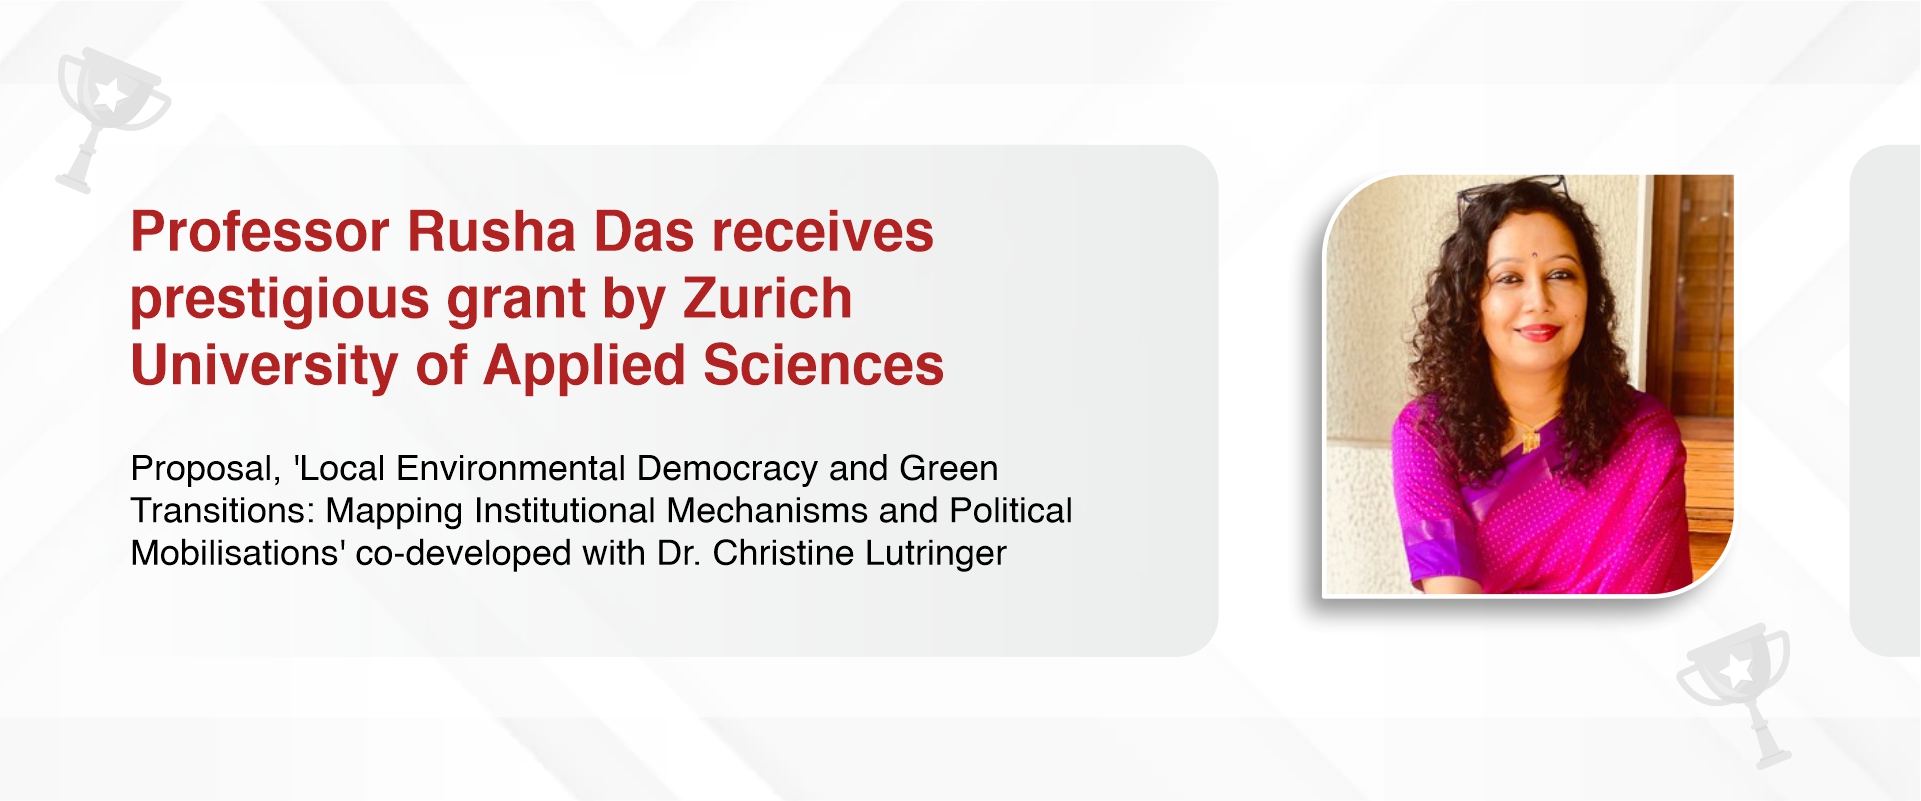 Professor Rusha Das receives prestigious grant by Zurich University of Applied Sciences